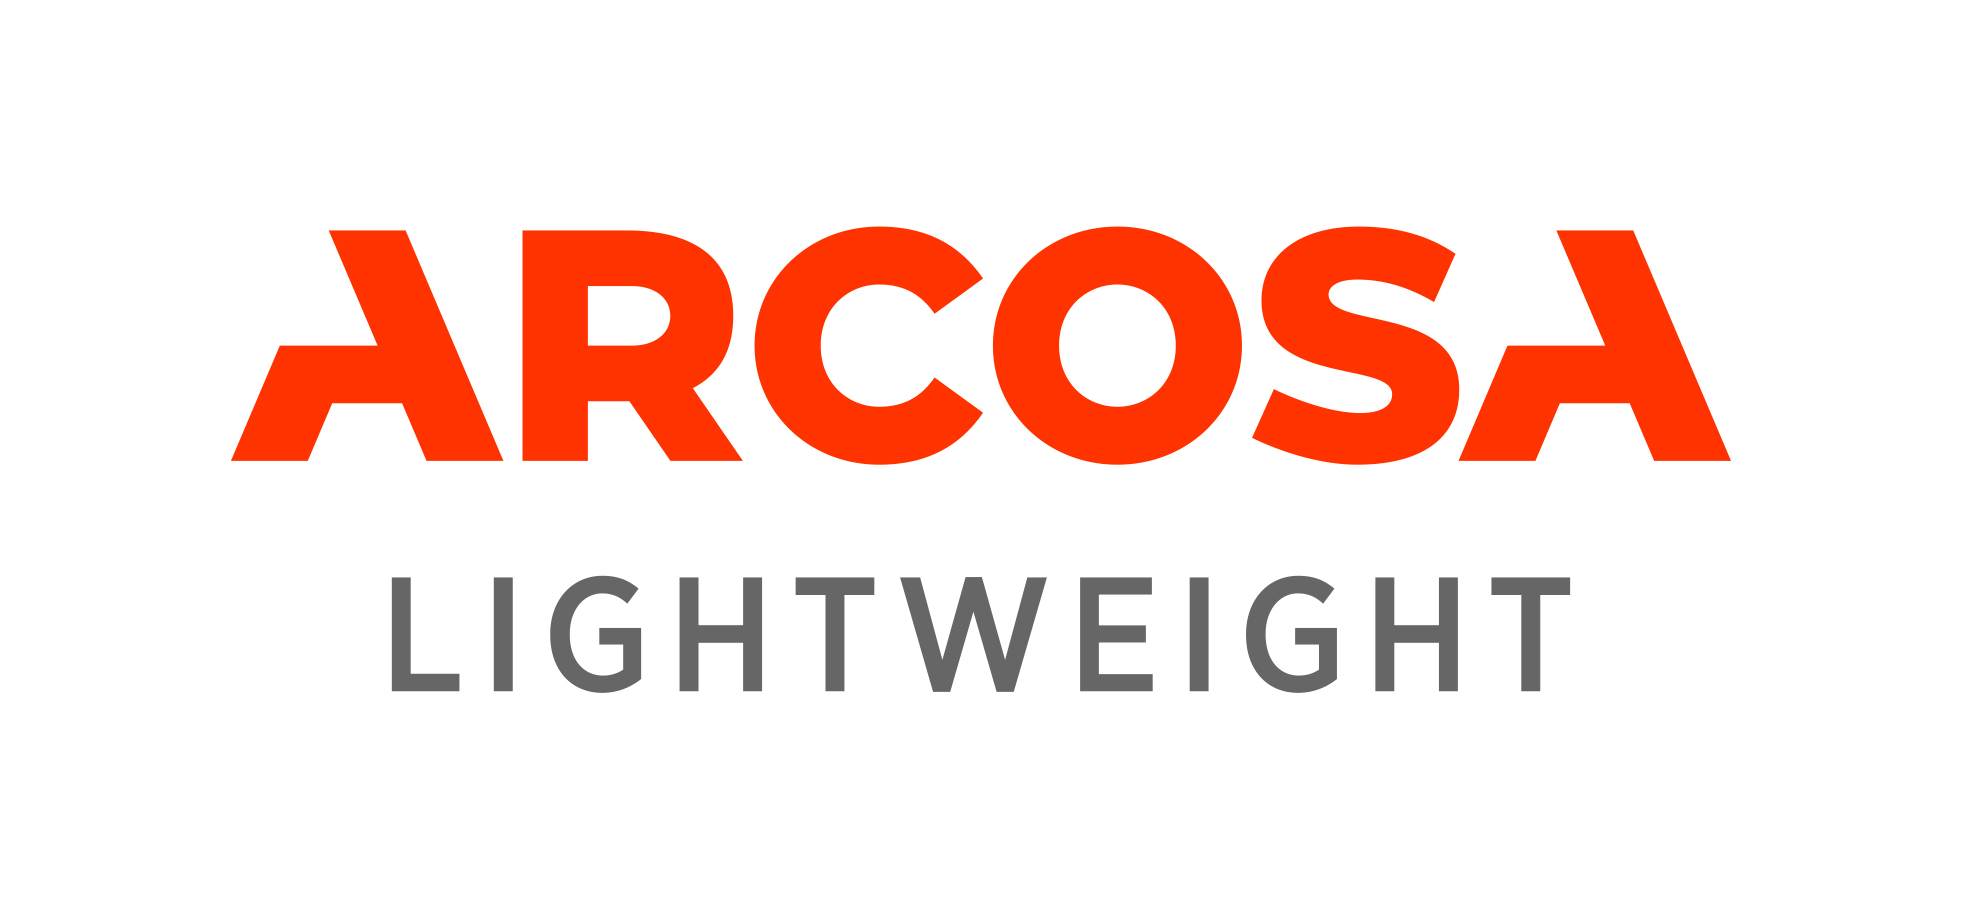 Arcosa Lightweight Orange CMYK